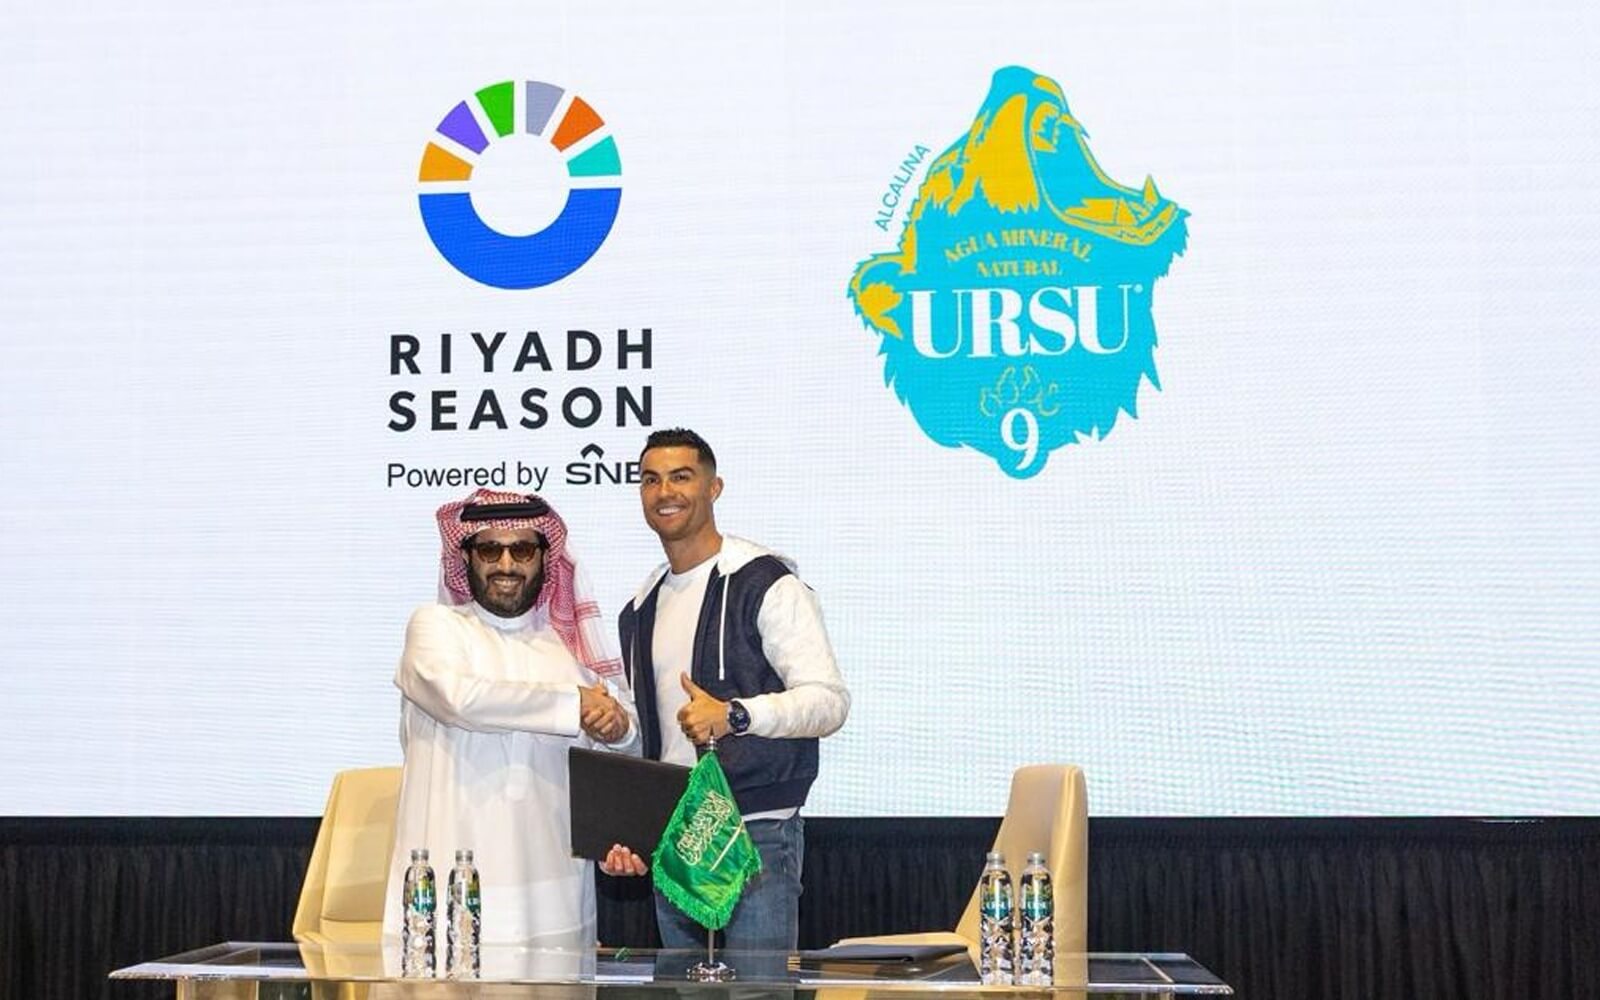 Ursu9 Announces Partnership as Official Water Sponsor for Riyadh Season 2023